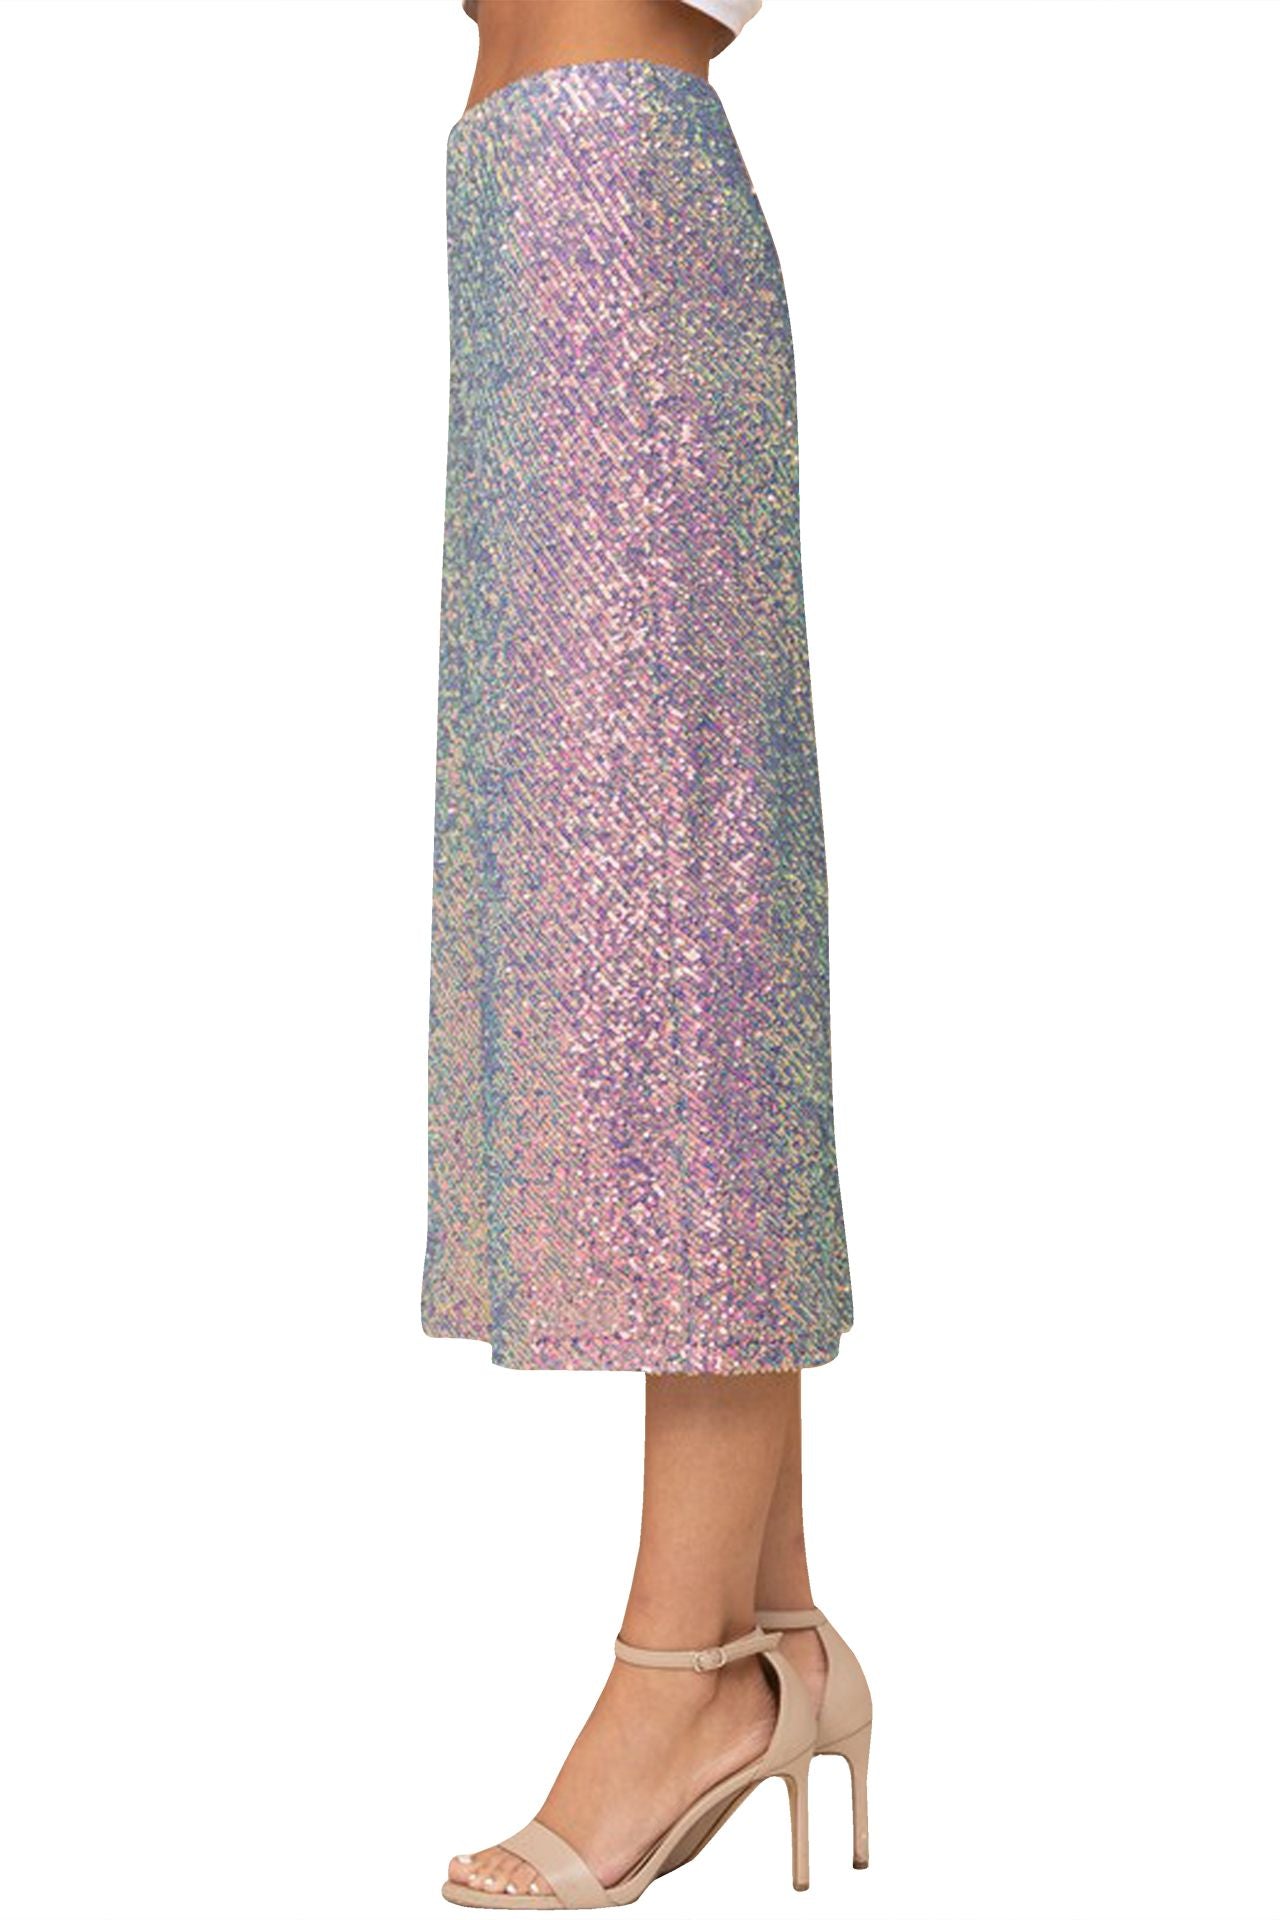 "sequin womens skirt" "purple sequin skirt" "Kyle X Shahida" "skirt with sequins" "sequin skirt"